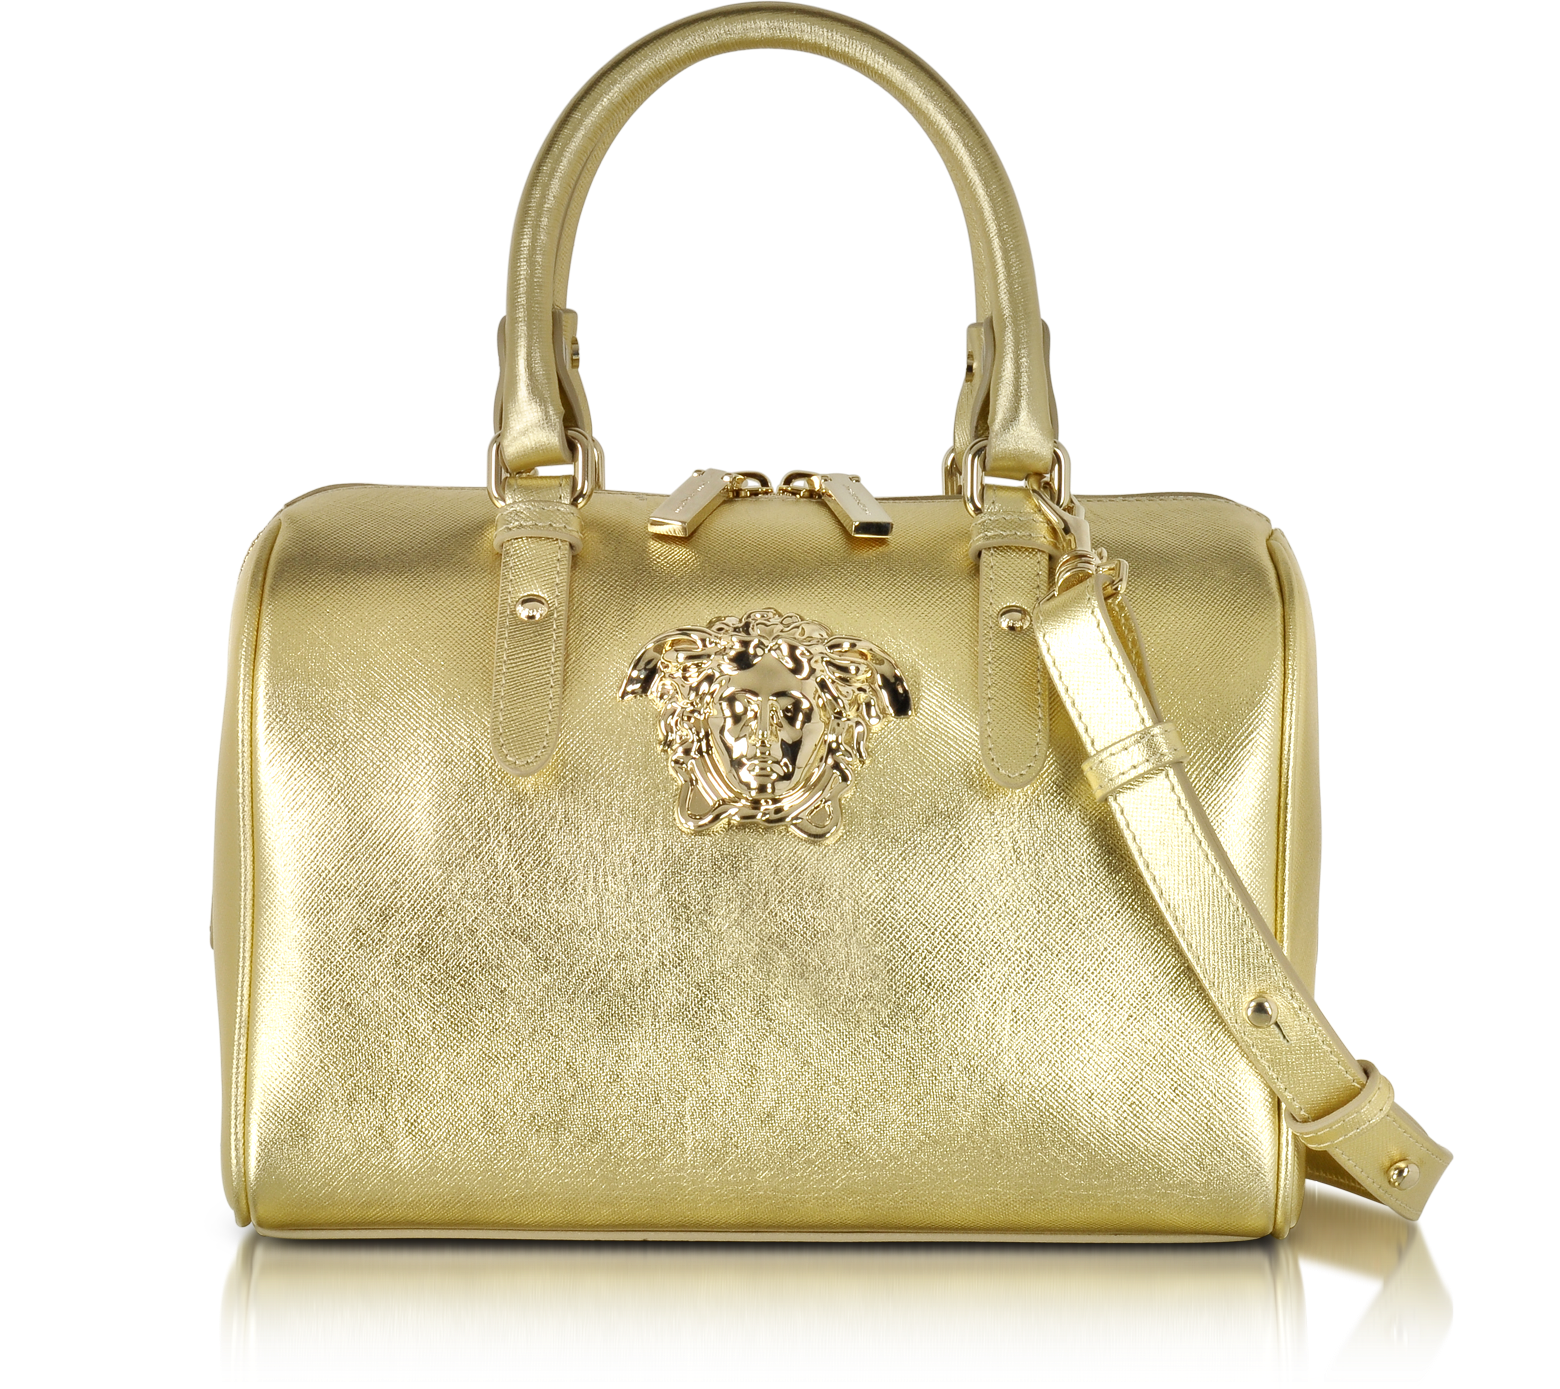 Versace Golden Saffiano Leather Satchel 